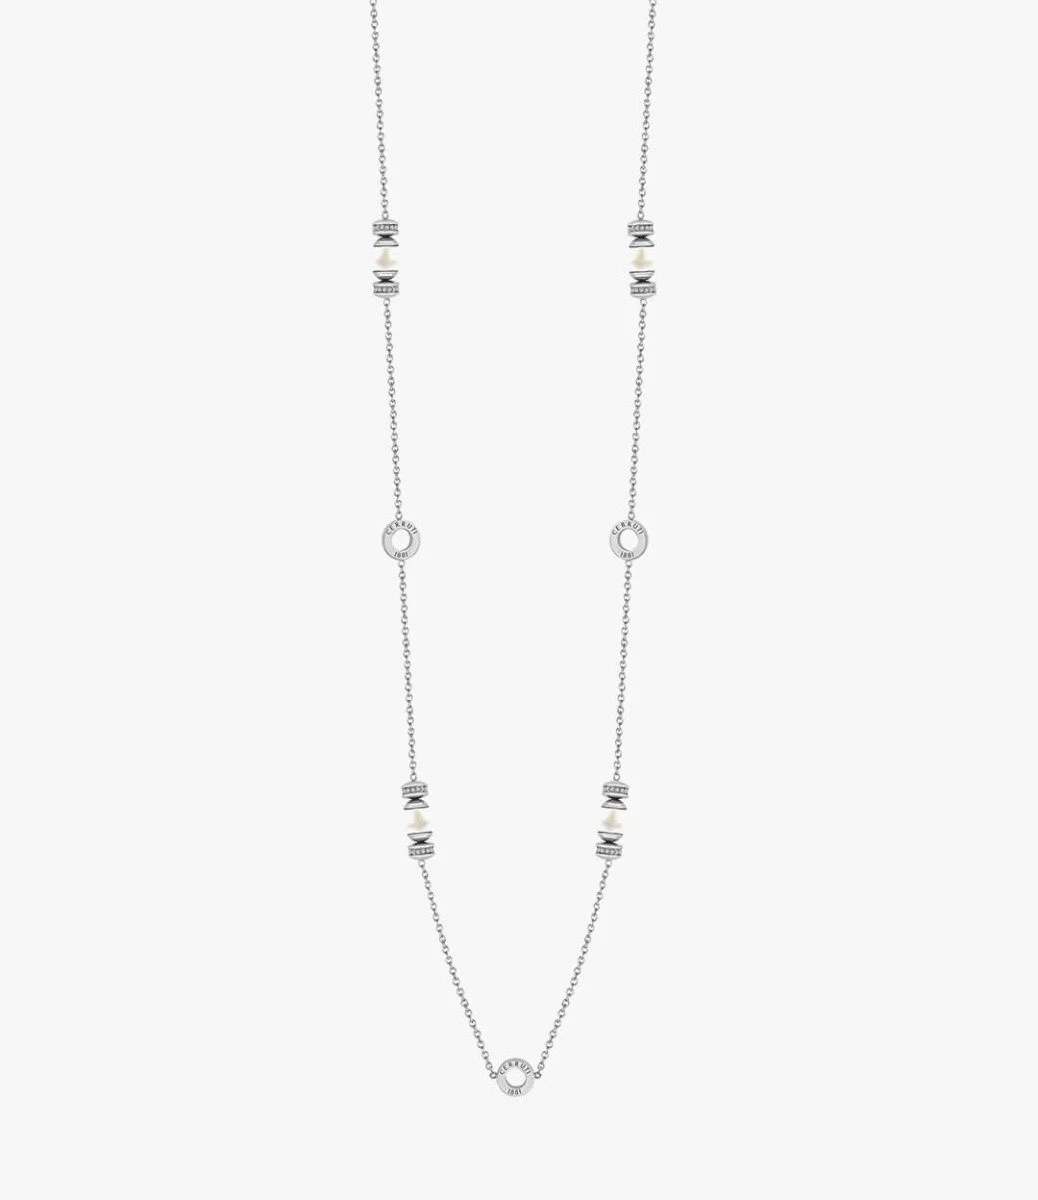 CERRUTI 1881 Women's Circle & Pearl Necklace